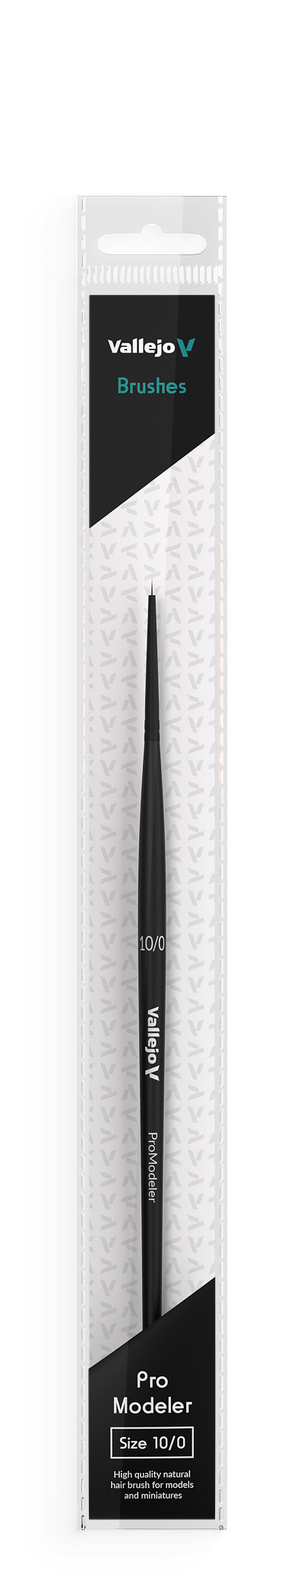 Vallejo Brushes - Pro Modeler - Natural Hair Round Brush No. 10/0 (Preorder)